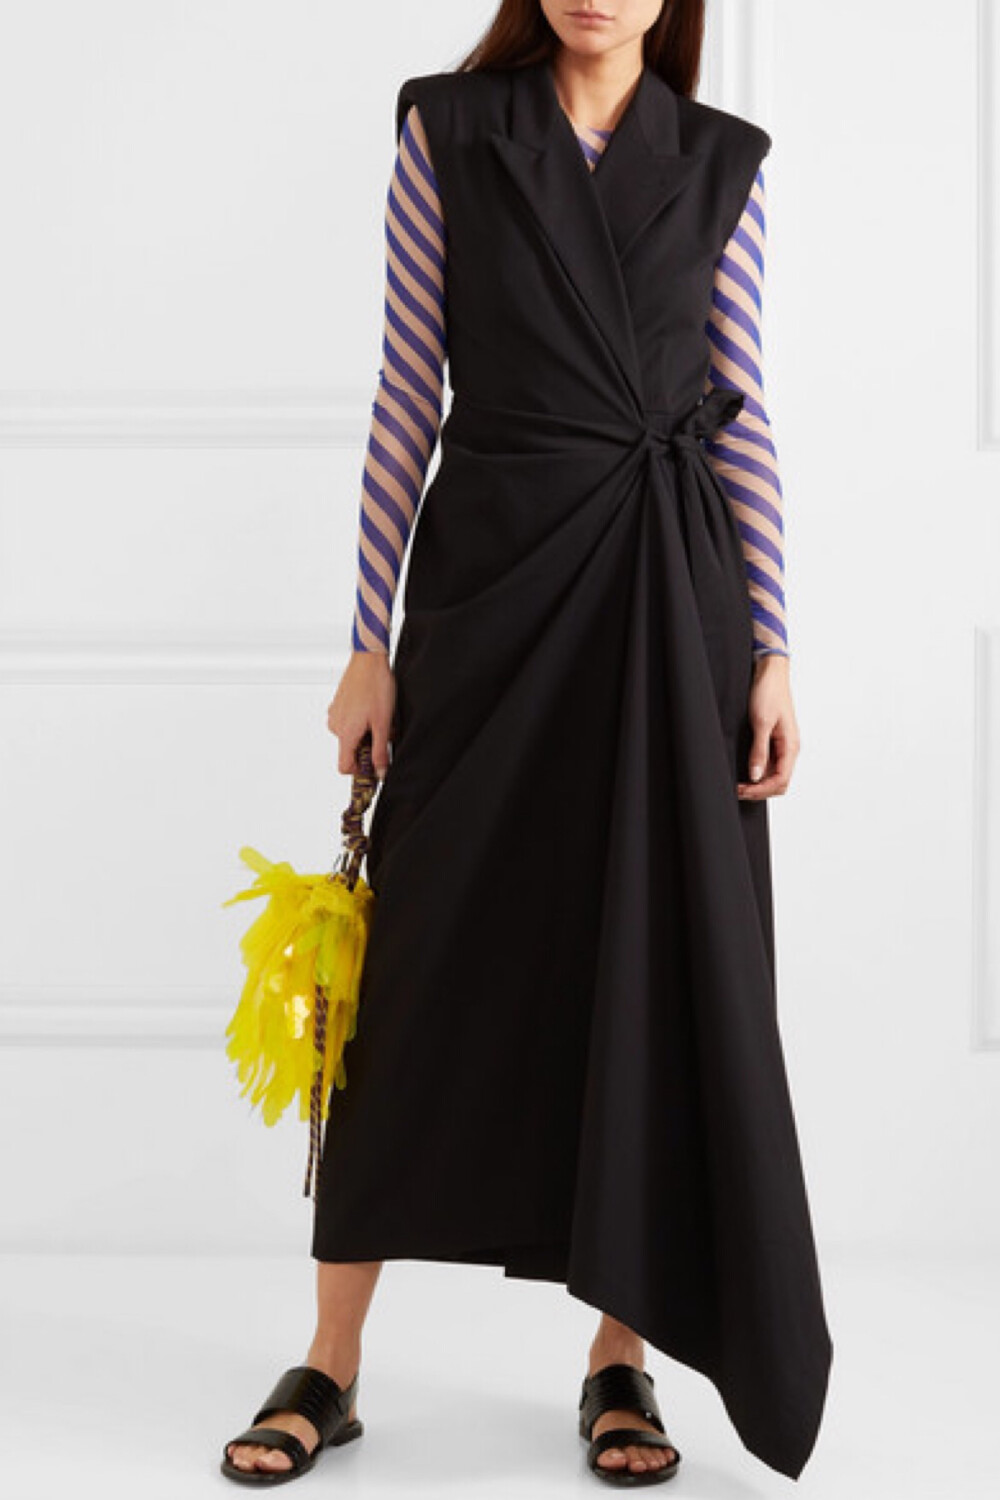 Dries Van Noten 在品牌 2019 春夏大秀的后台上说道，该系列作品带有高定服饰的特点，但却并不复古。这款连衣裙裁自棉质羊毛混纺斜纹布，垂感十足，腰间收束感的缩褶围裹式设计形成了优雅的不对称裙摆。垫肩和尖领则是承袭了精裁服饰的元素，十分经典。不妨配以同品牌令人玩味的 PVC 手提包。